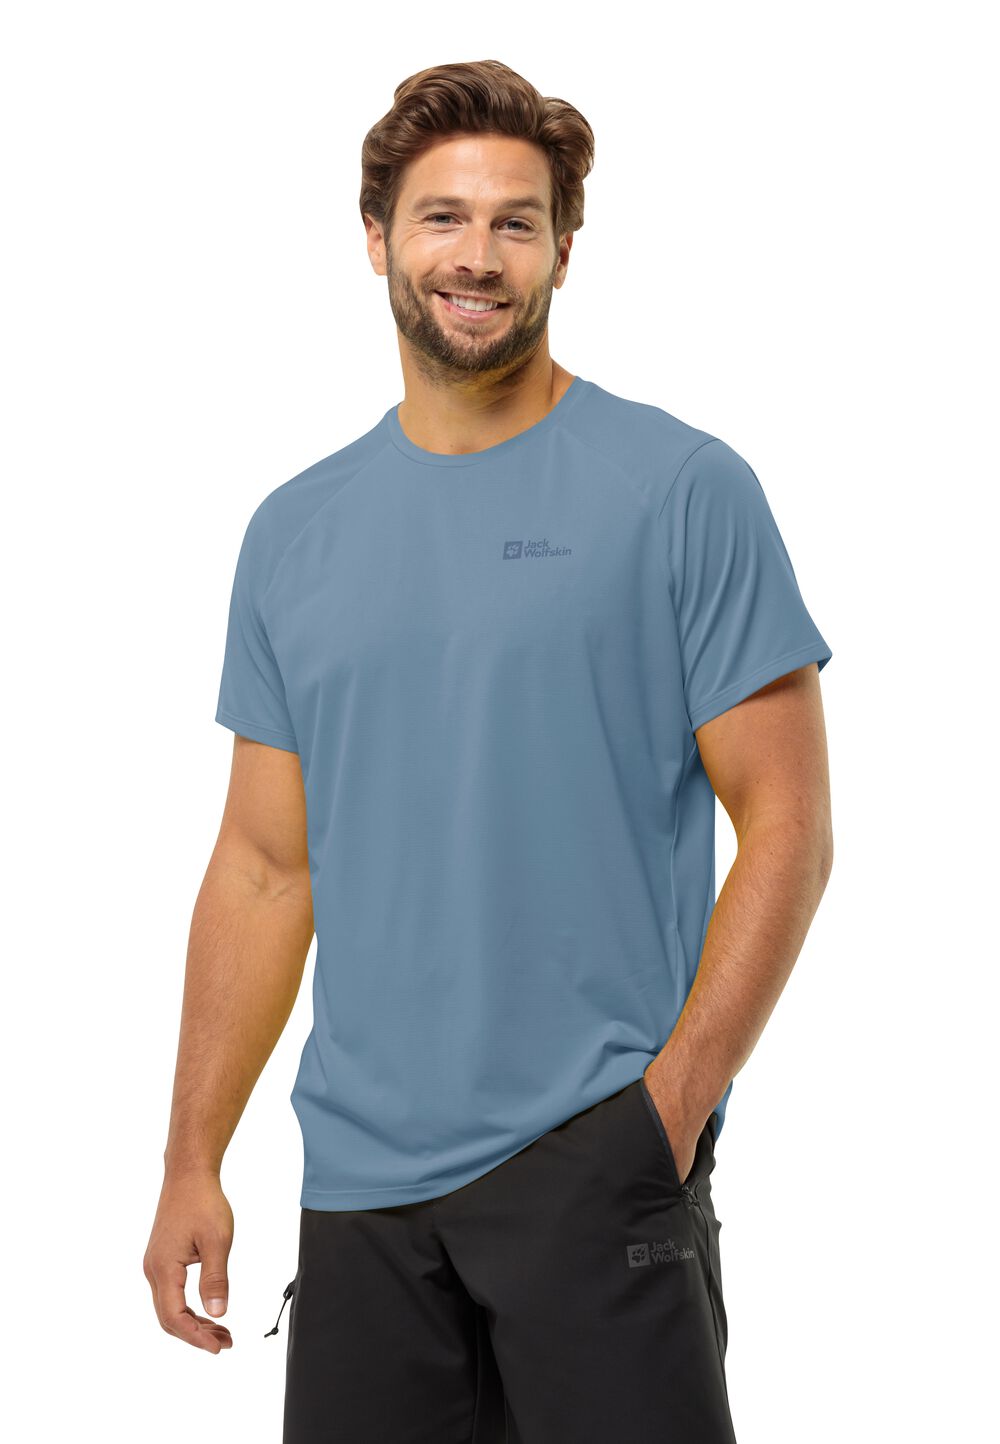 Jack Wolfskin Prelight Trail T-Shirt Men Functioneel shirt Heren M elemental blue elemental blue